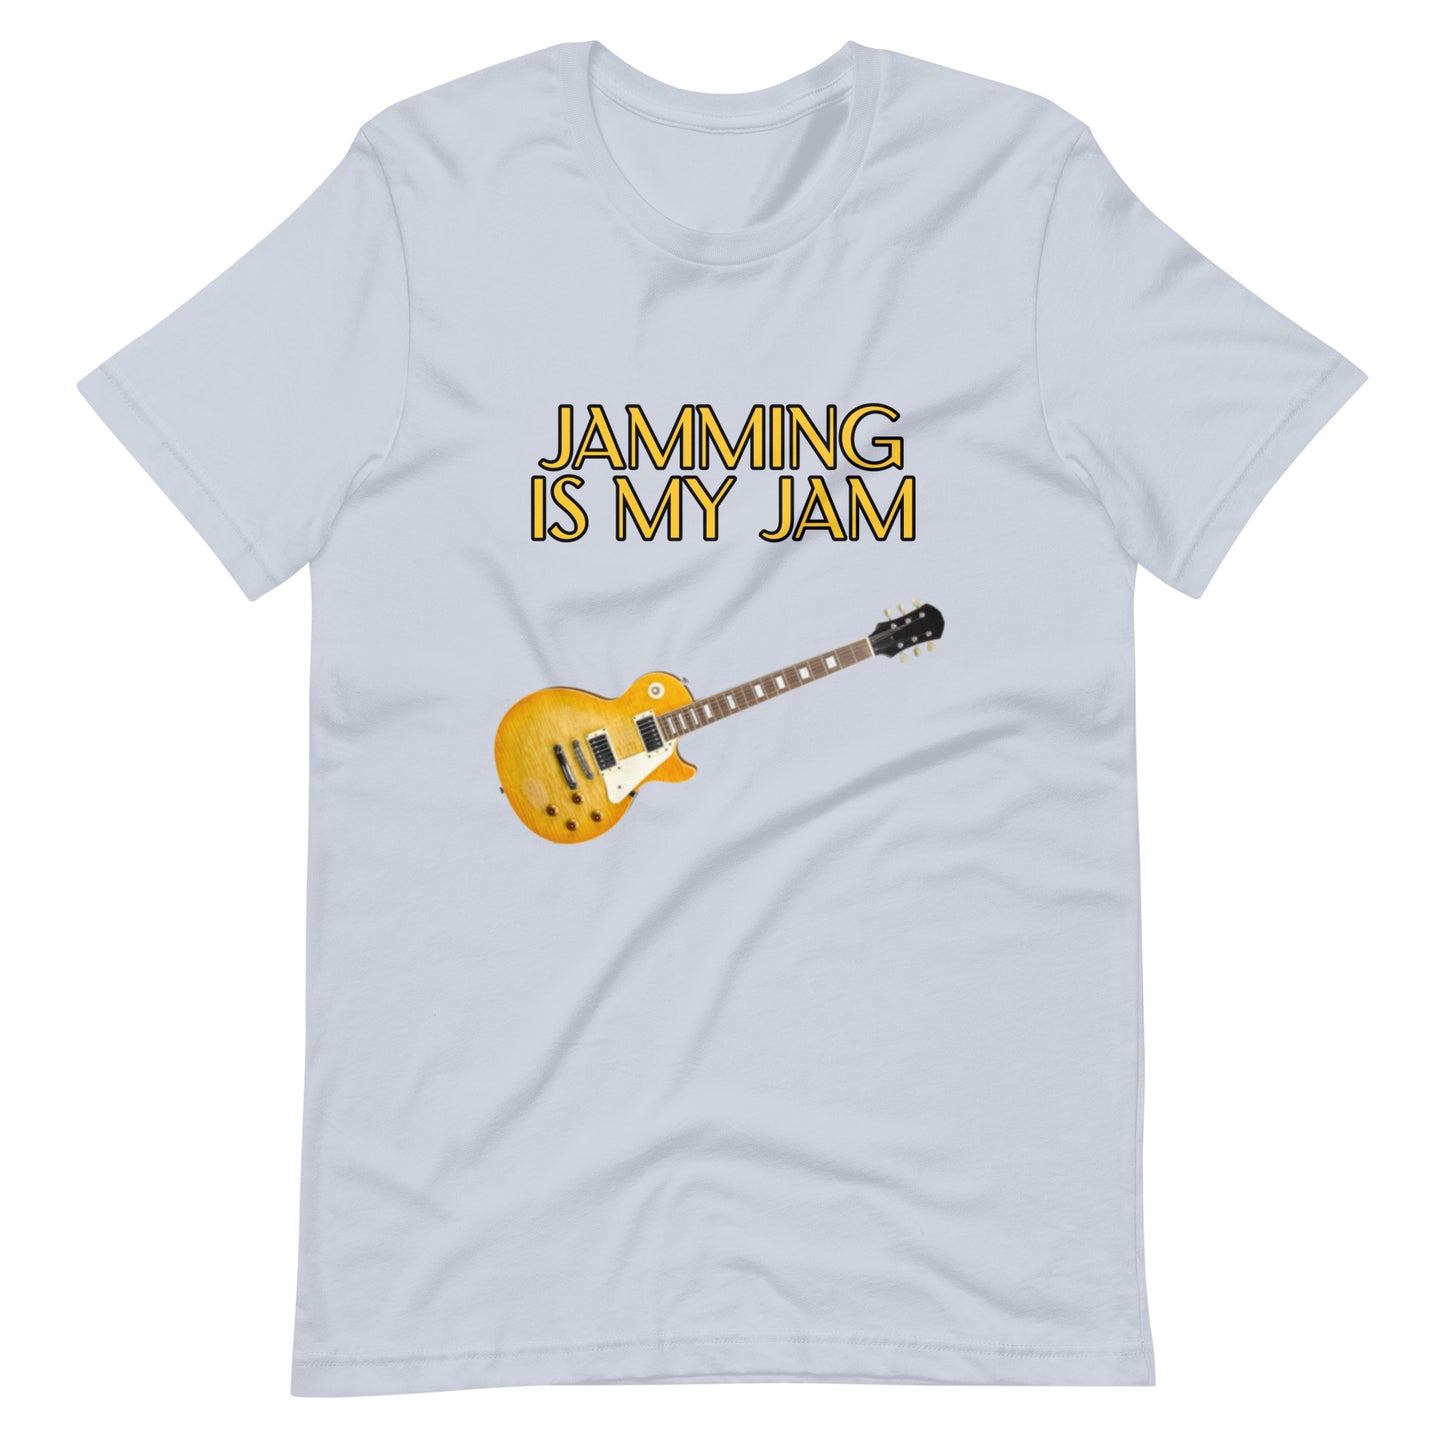 Jamming is my jam